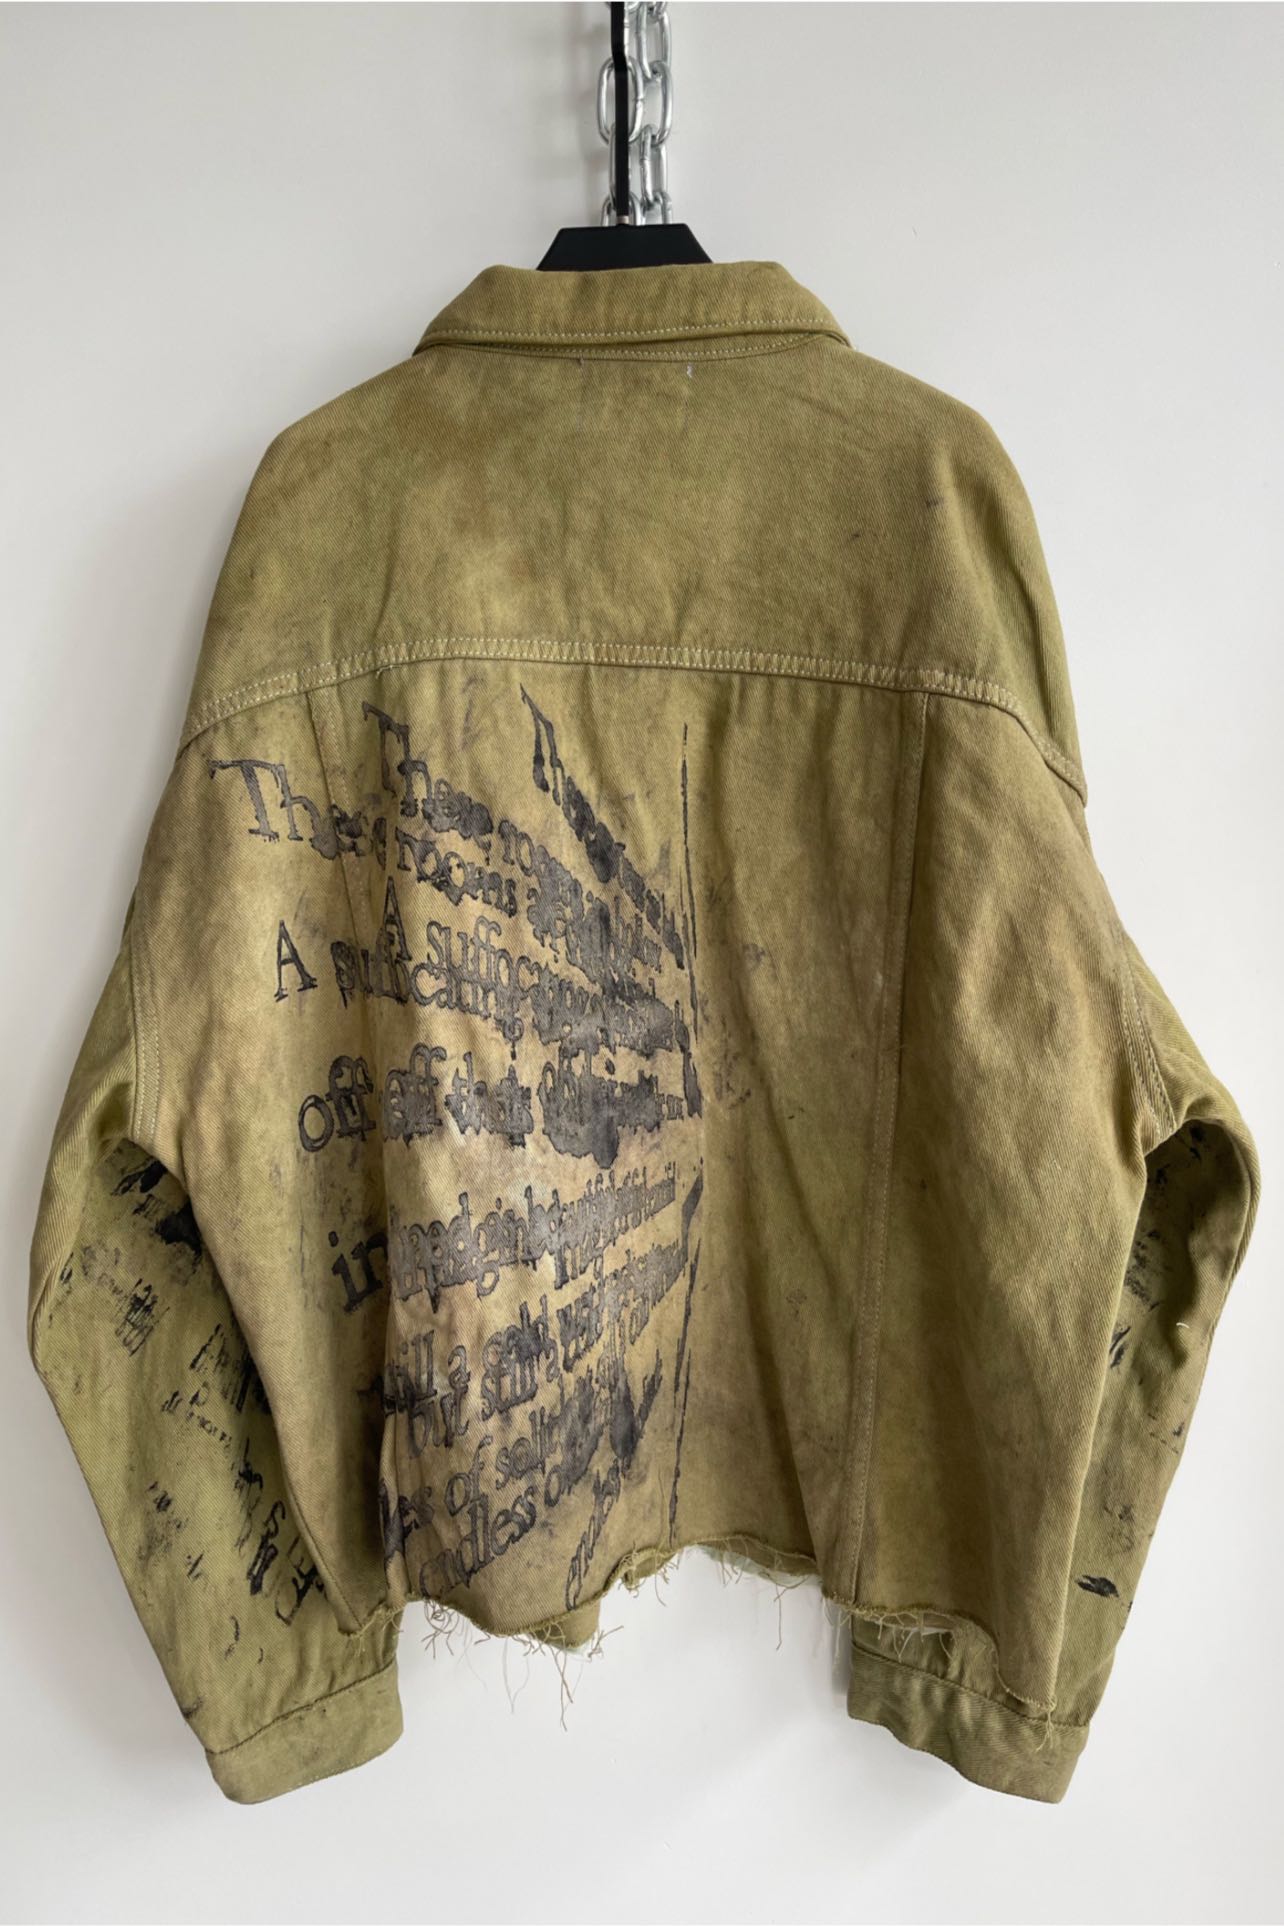 Handmade customized denim jacket